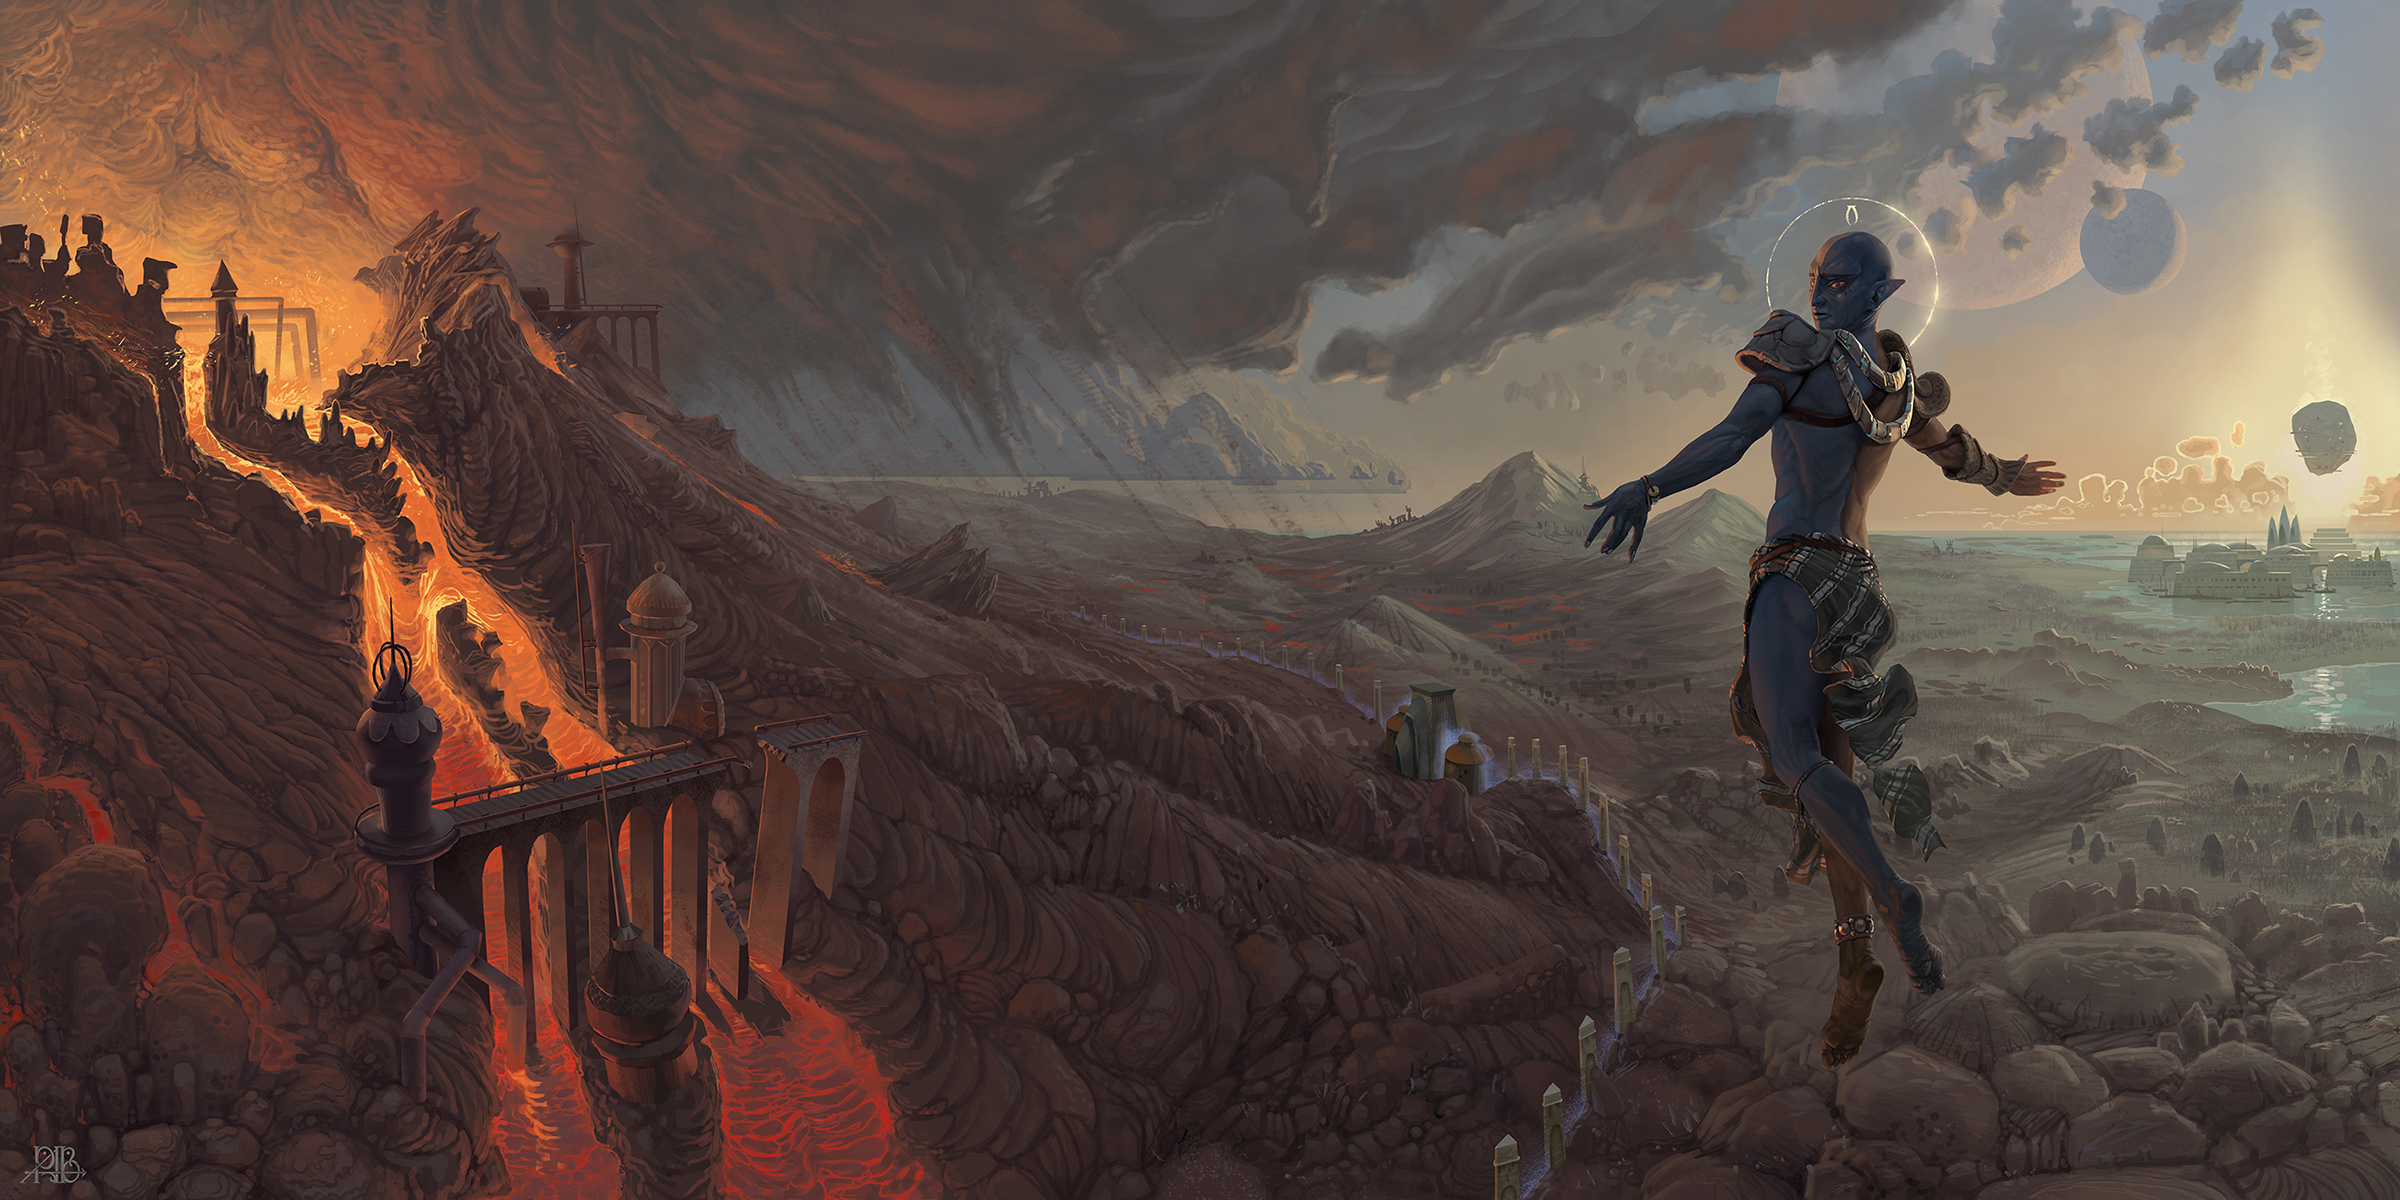 PCデスクトップにエルダースクロール, テレビゲーム, The Elder Scrolls Iii: Morrowind (モロウウィンド)画像を無料でダウンロード